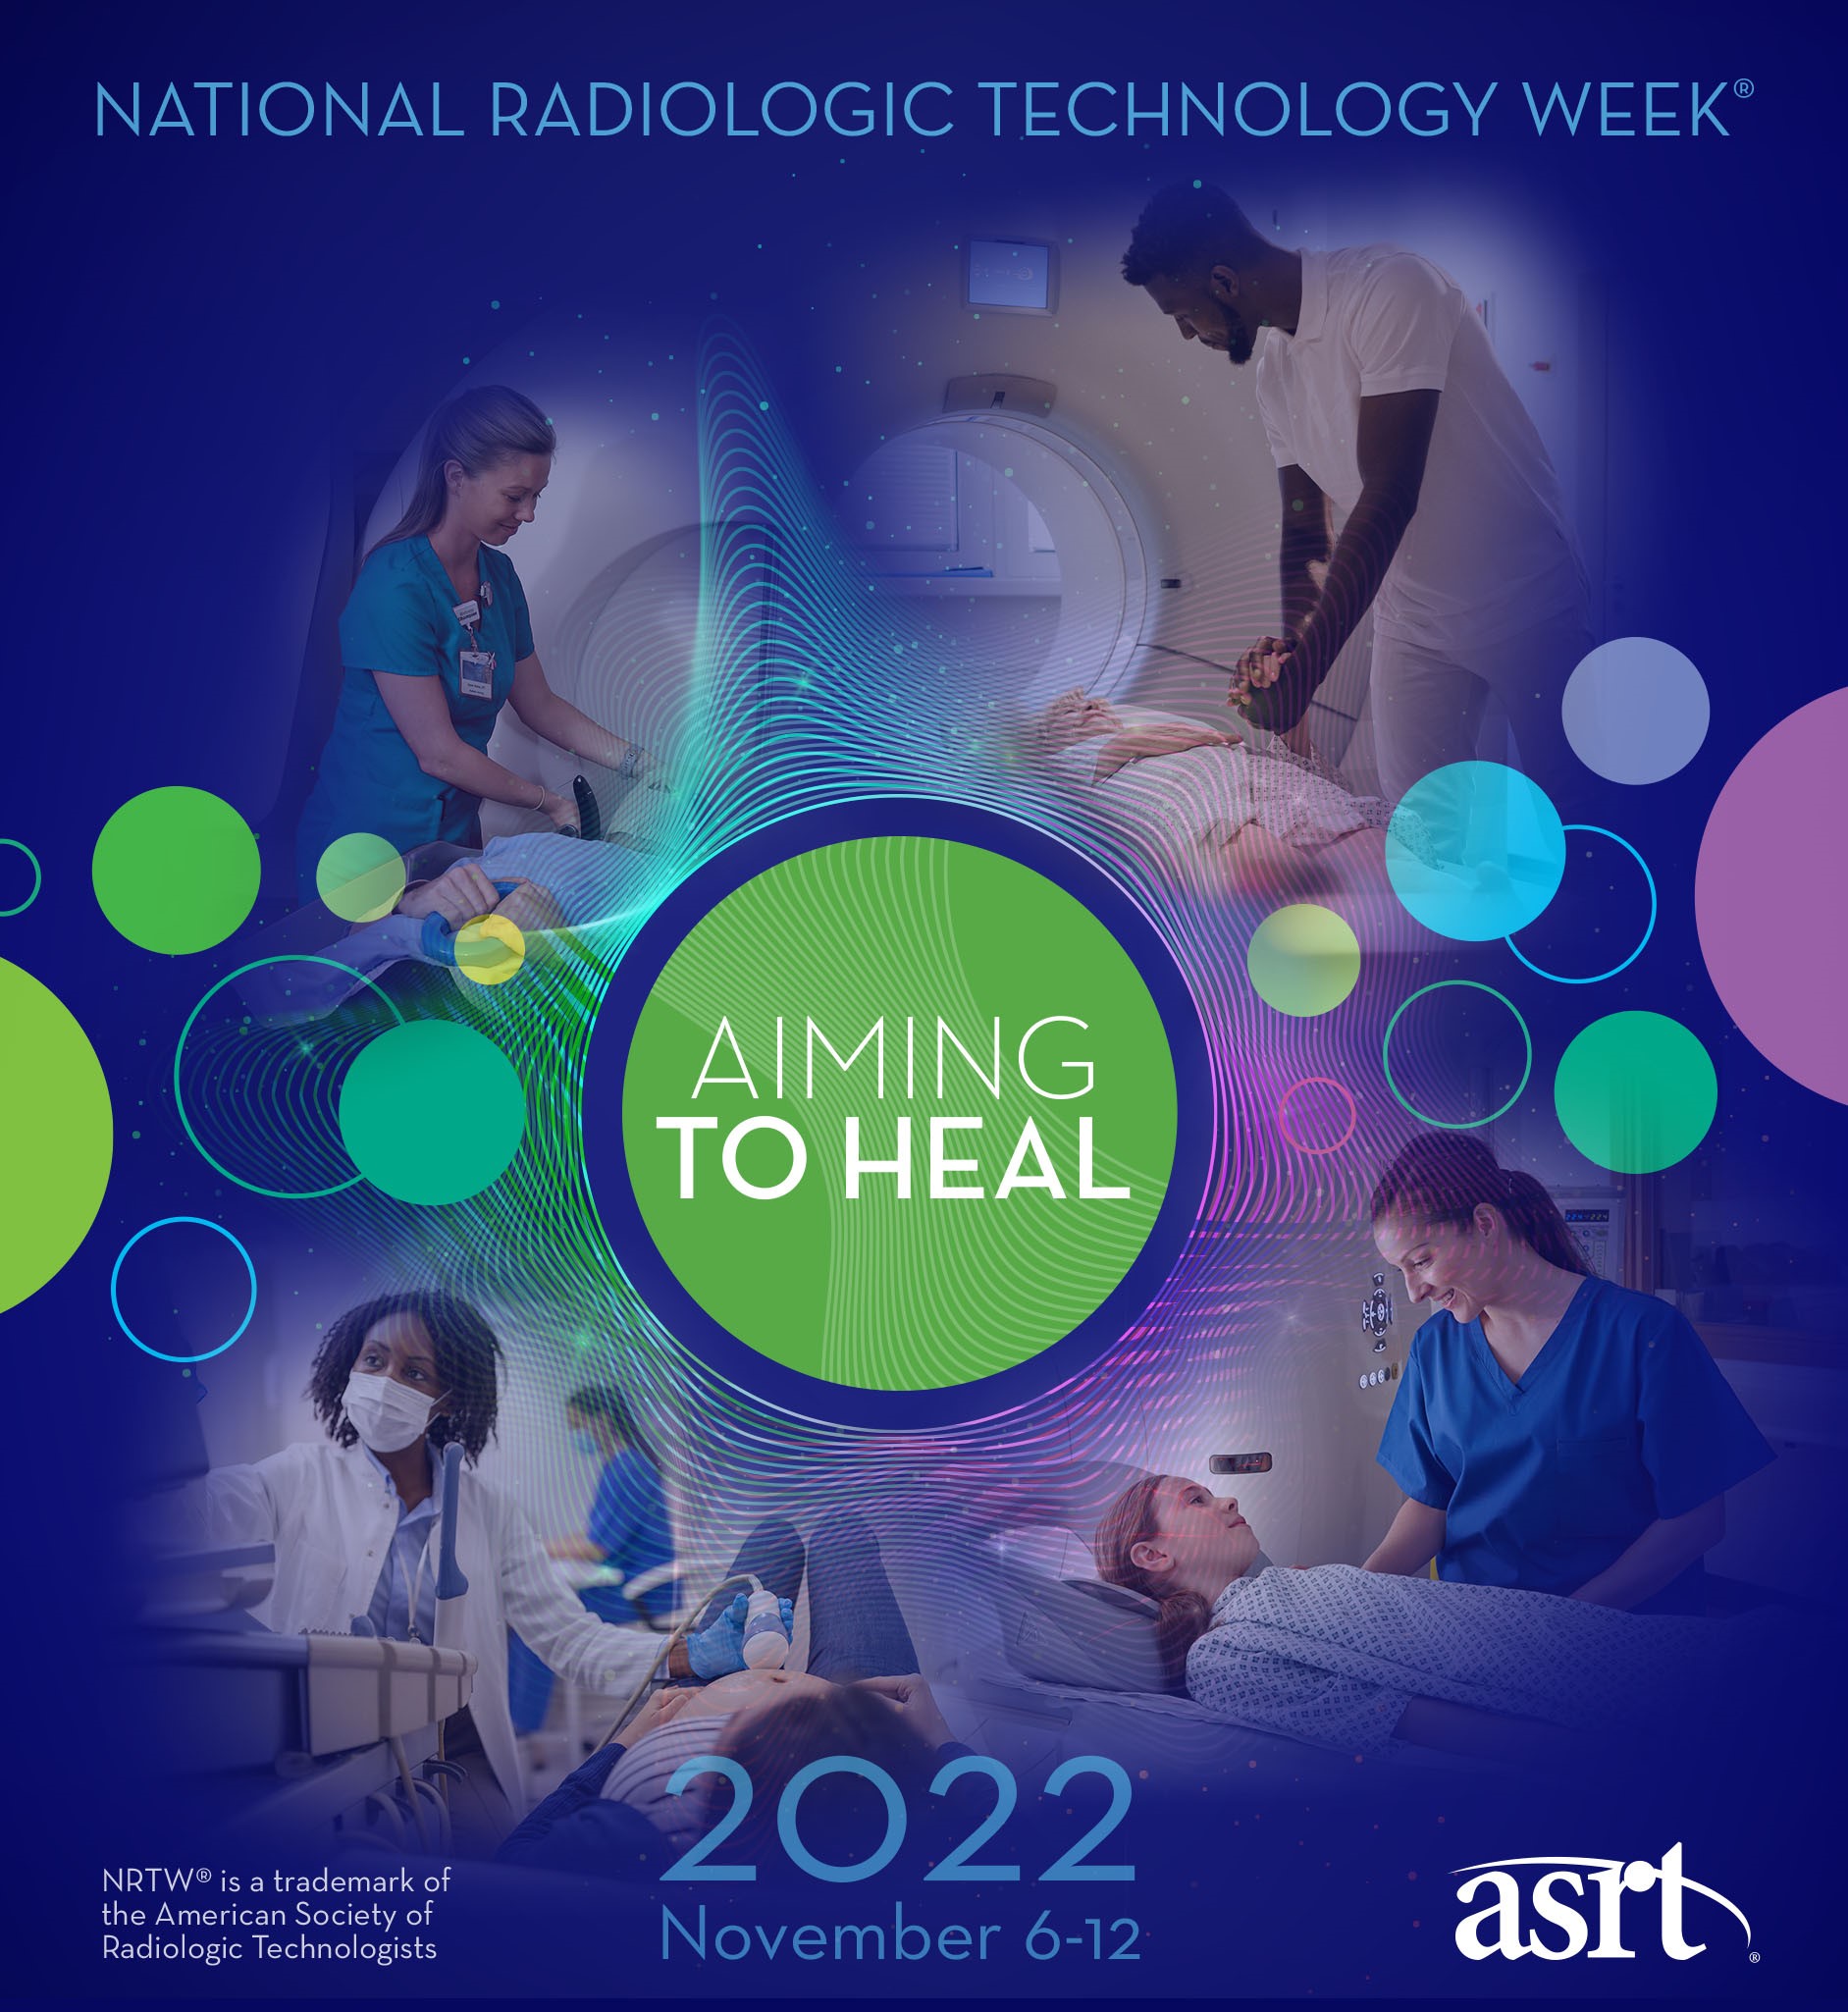 National Radiologic Technology Week 2022